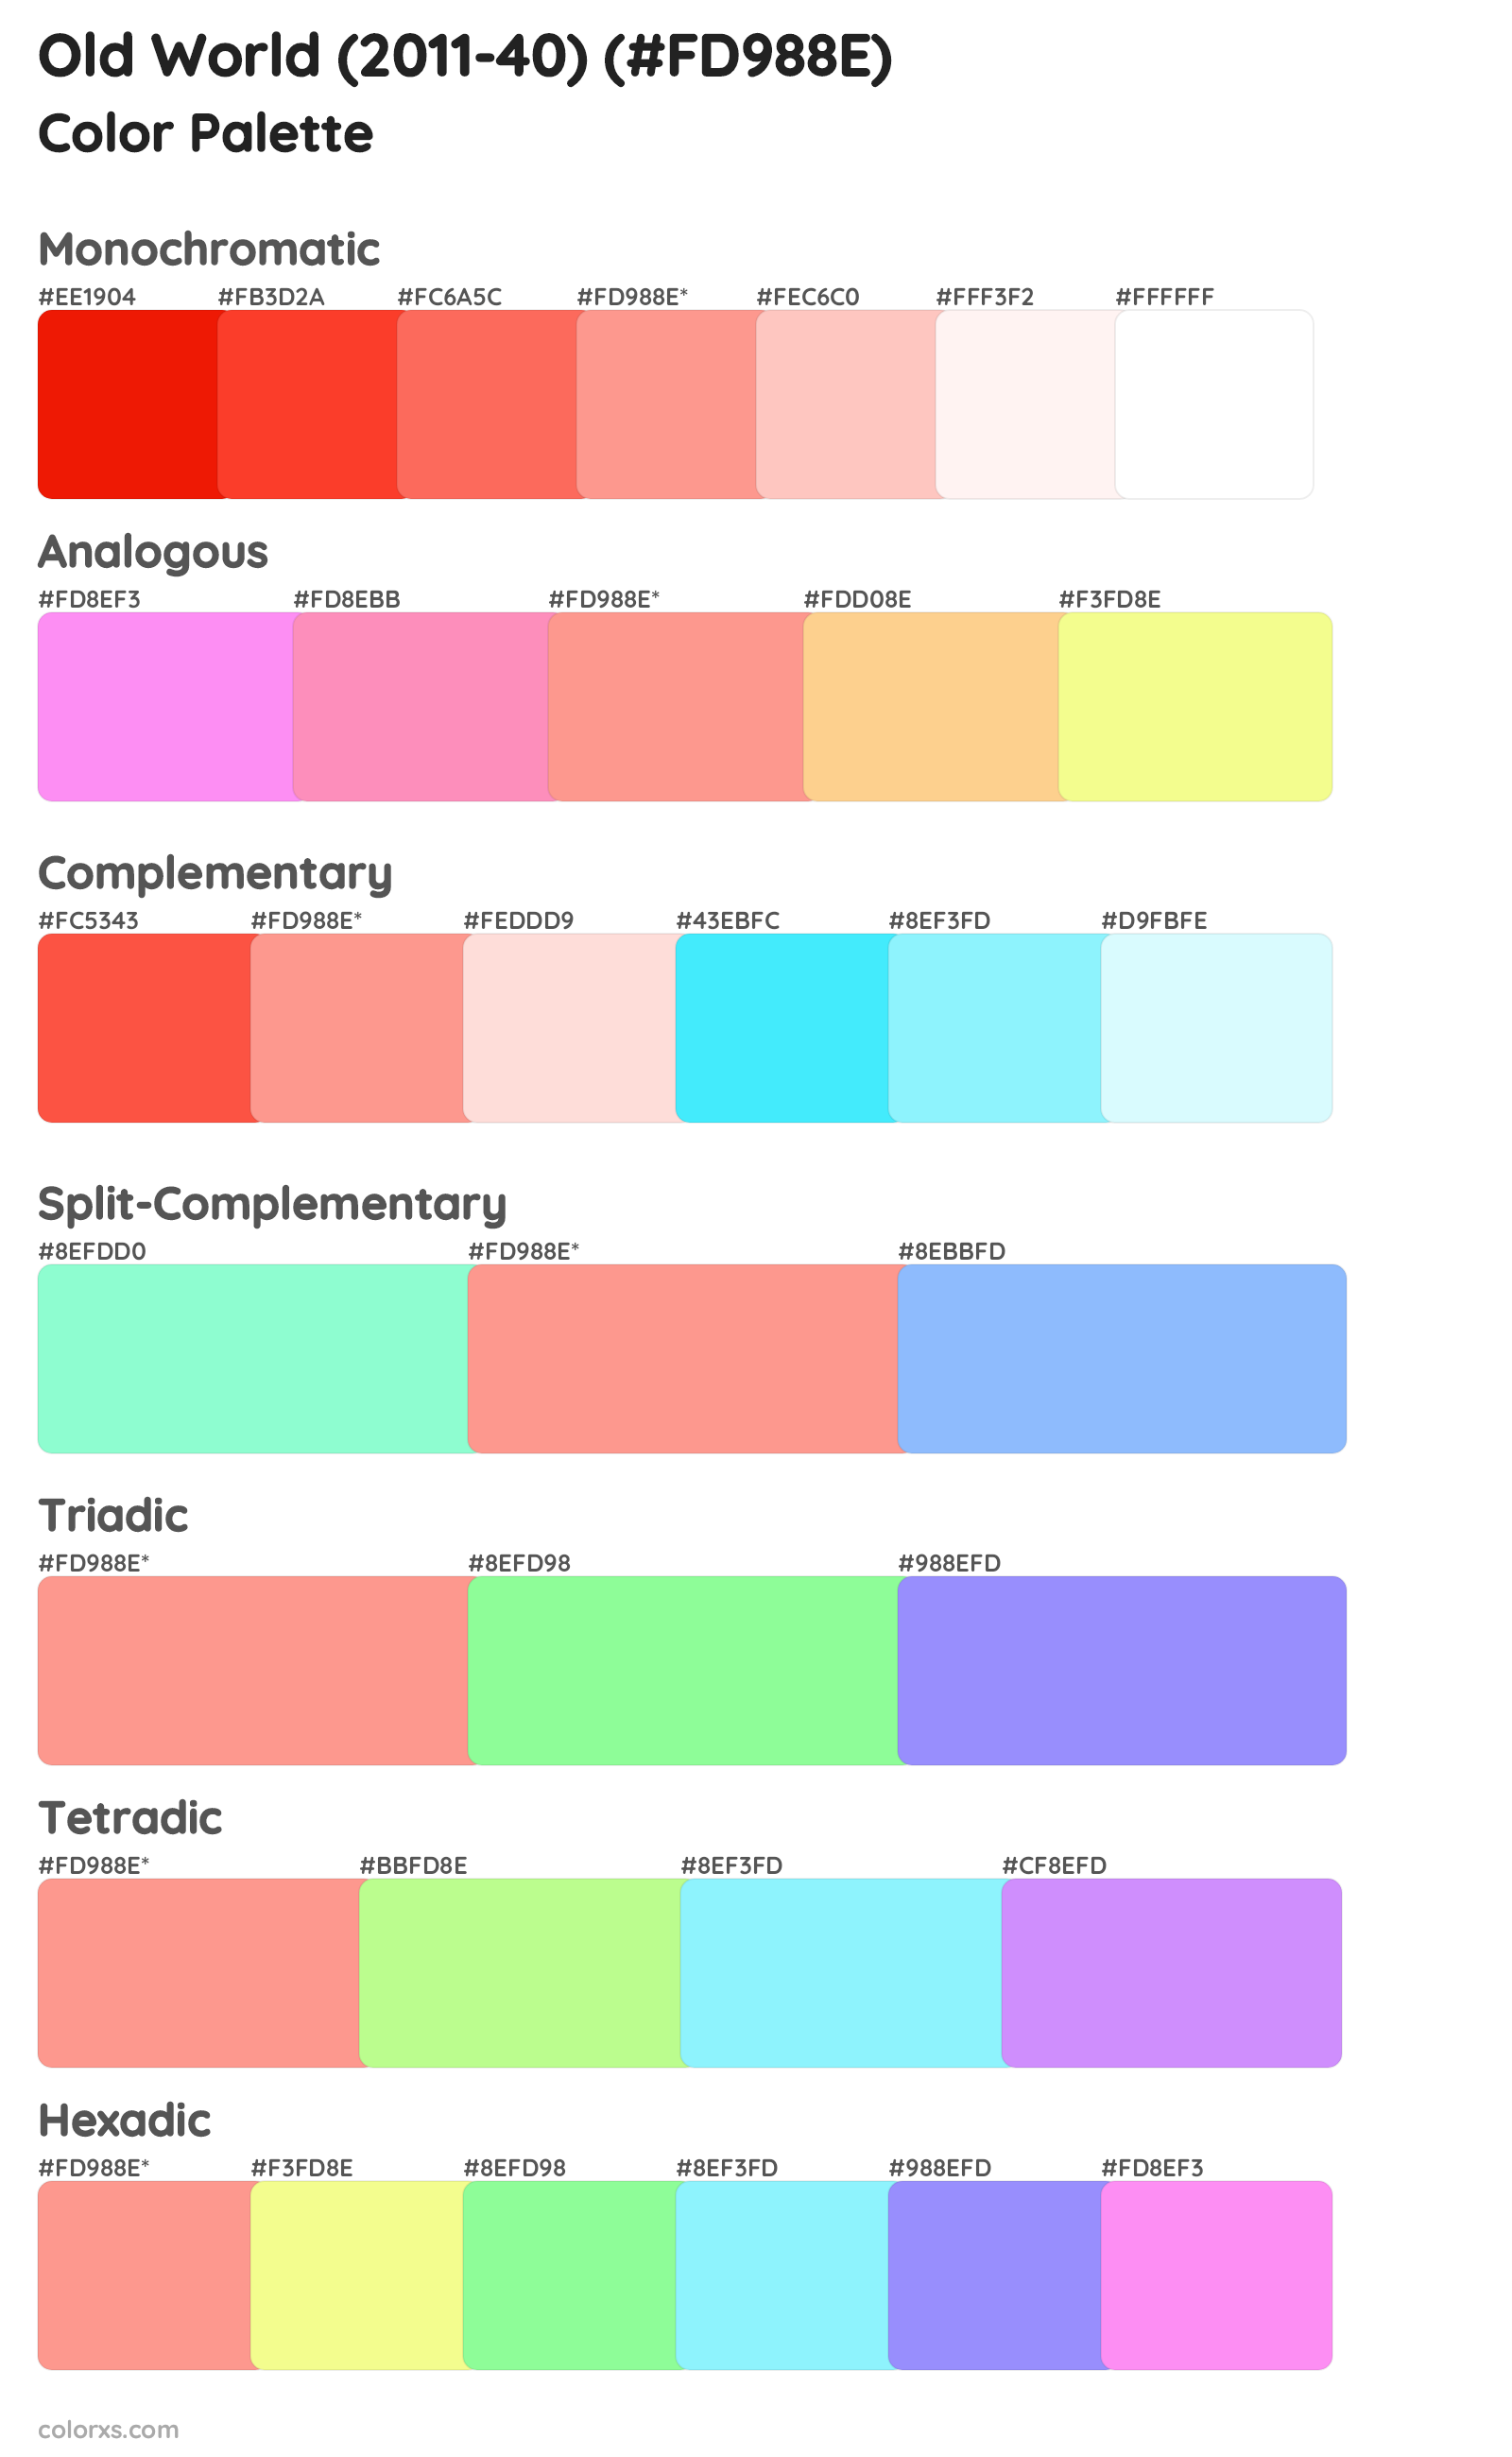 Old World (2011-40) Color Scheme Palettes